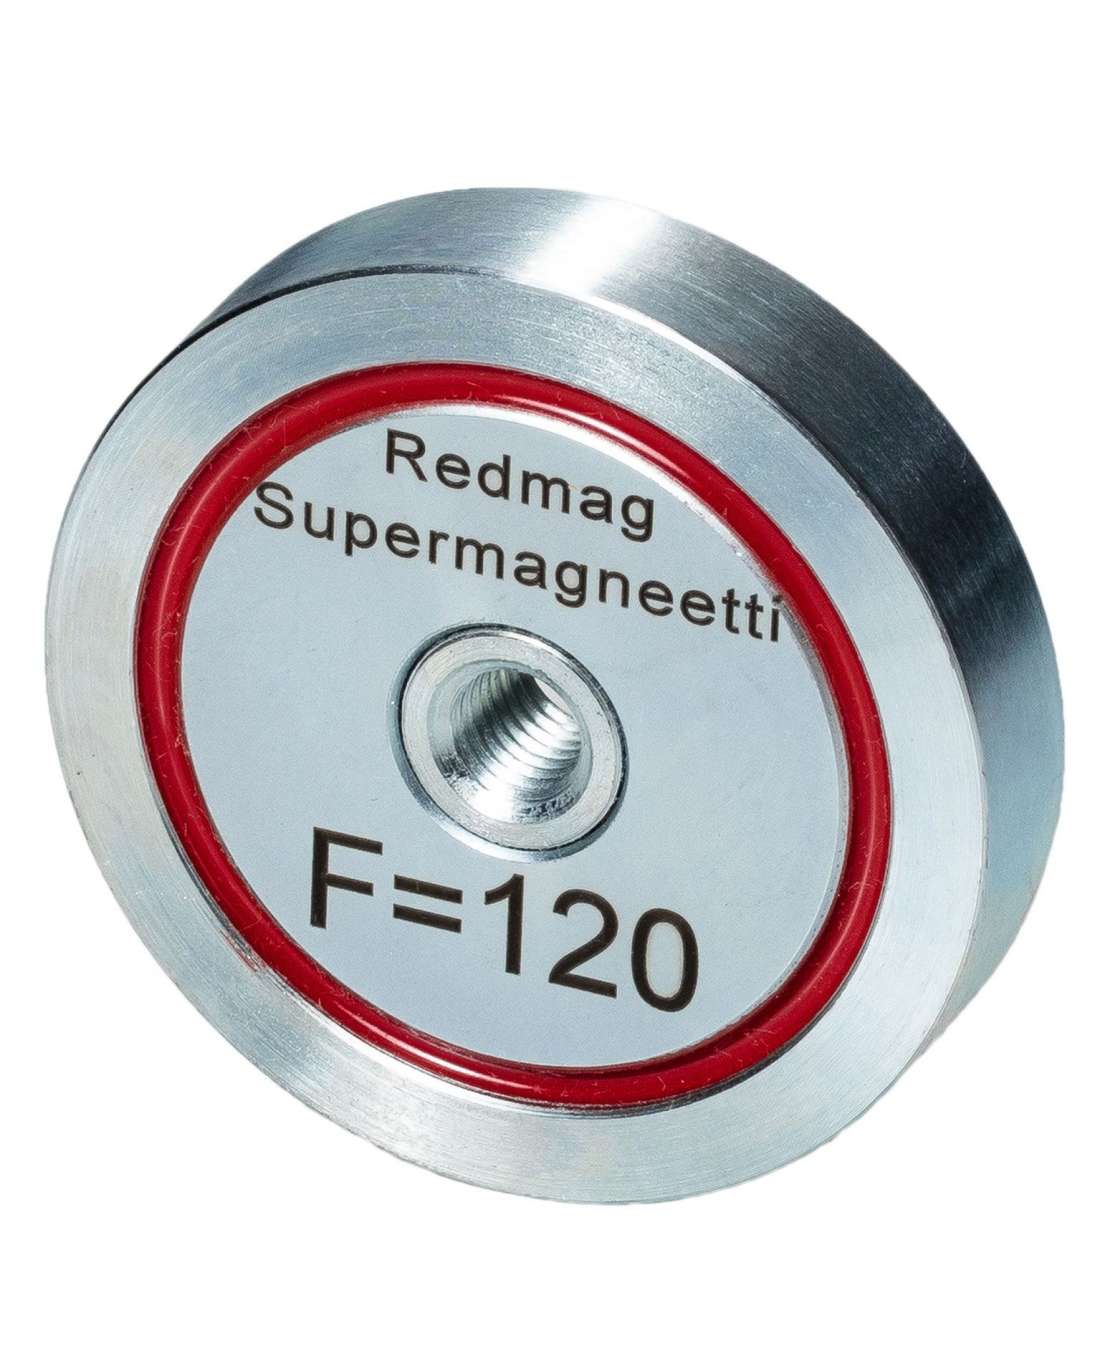 Redmag Supermagneetti F120 (120 kg, 67mm)